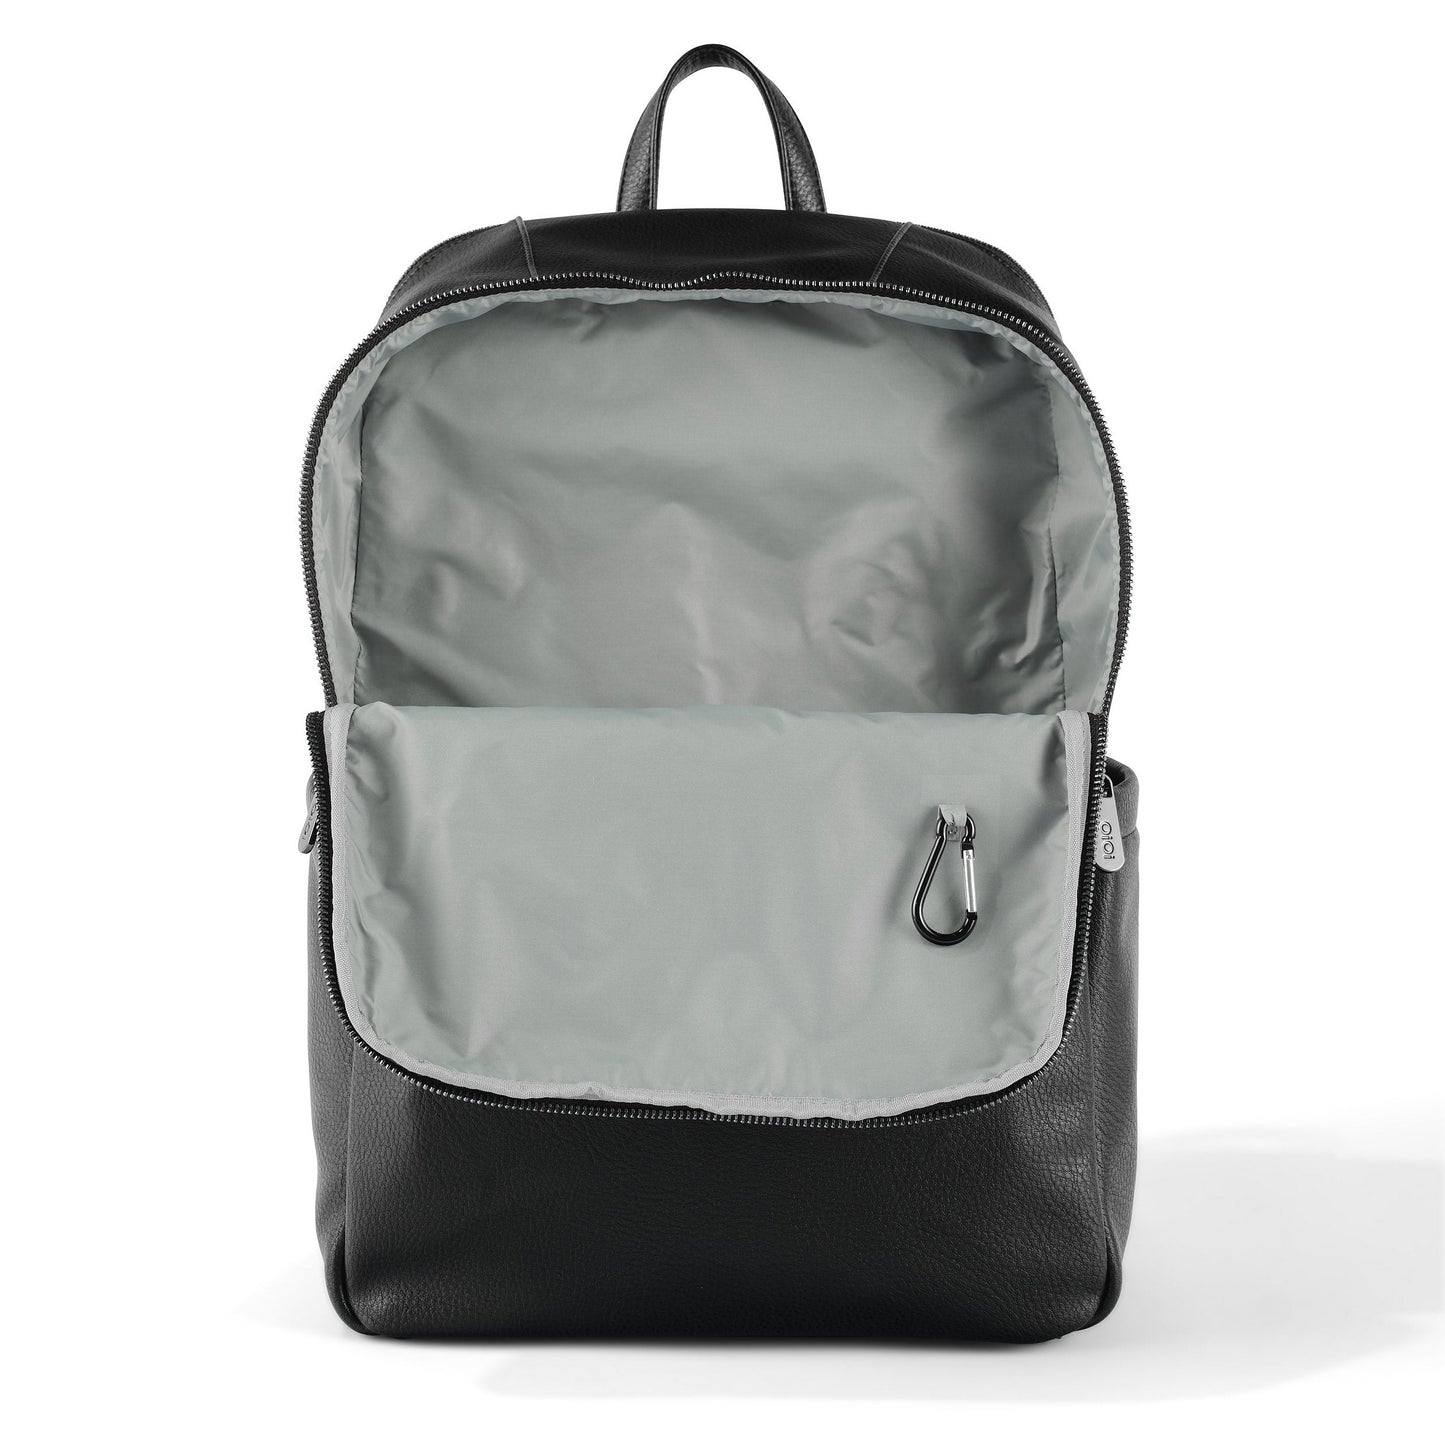 Multitasker Diaper Backpack - Black Vegan Leather